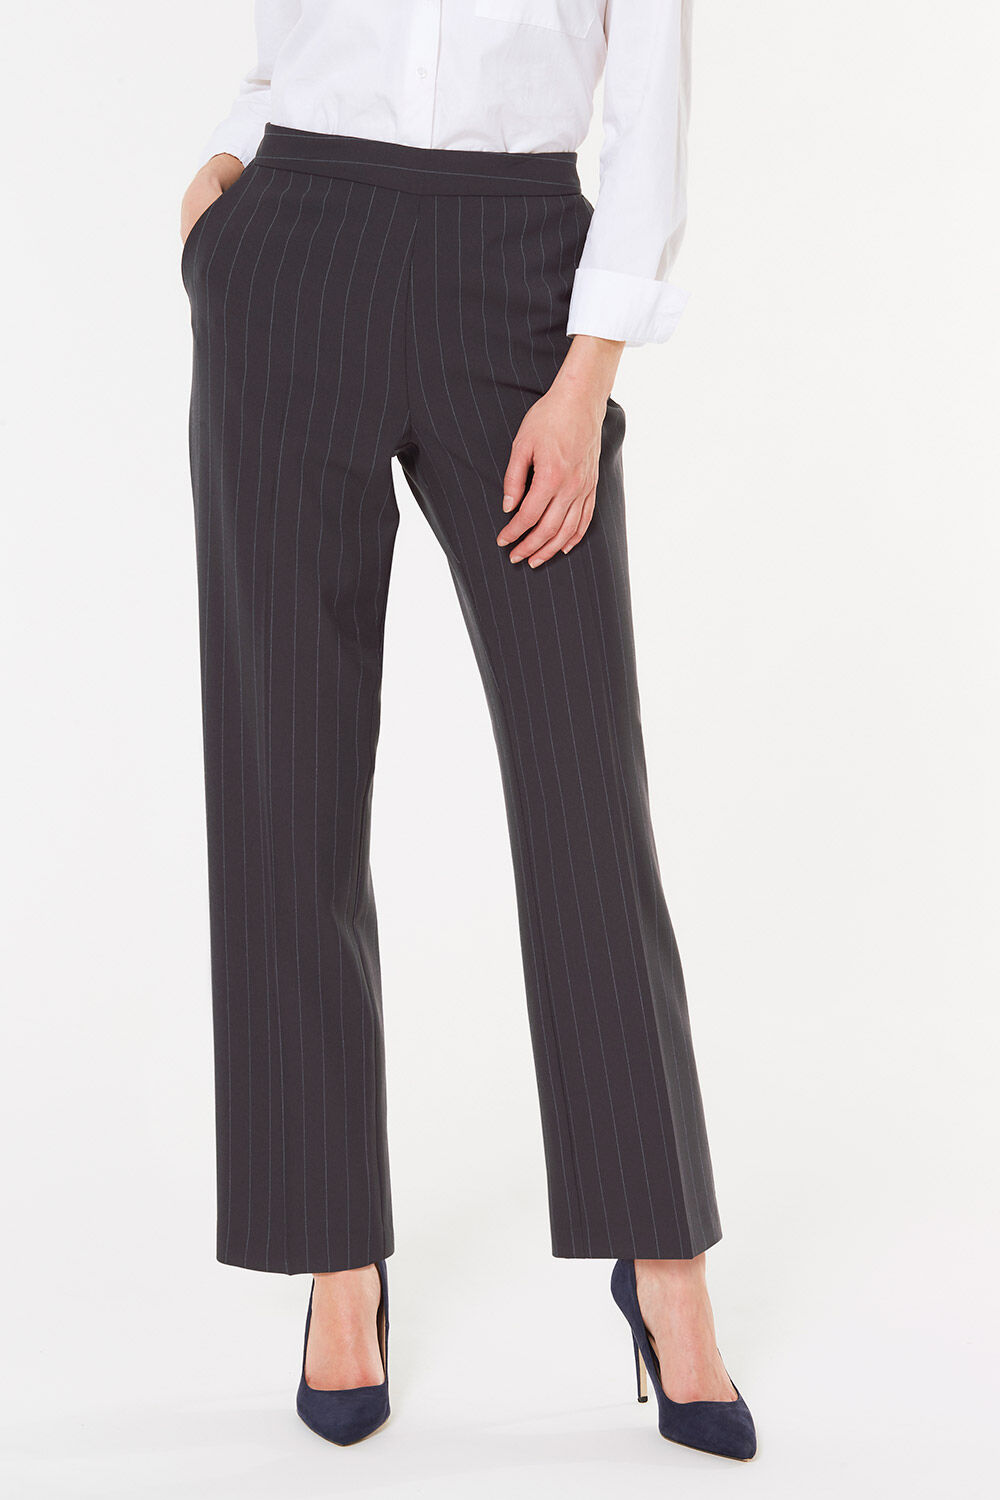 Bonmarche Classic Straight Leg Stripe Pull On Trouser - Navy, Size: 18